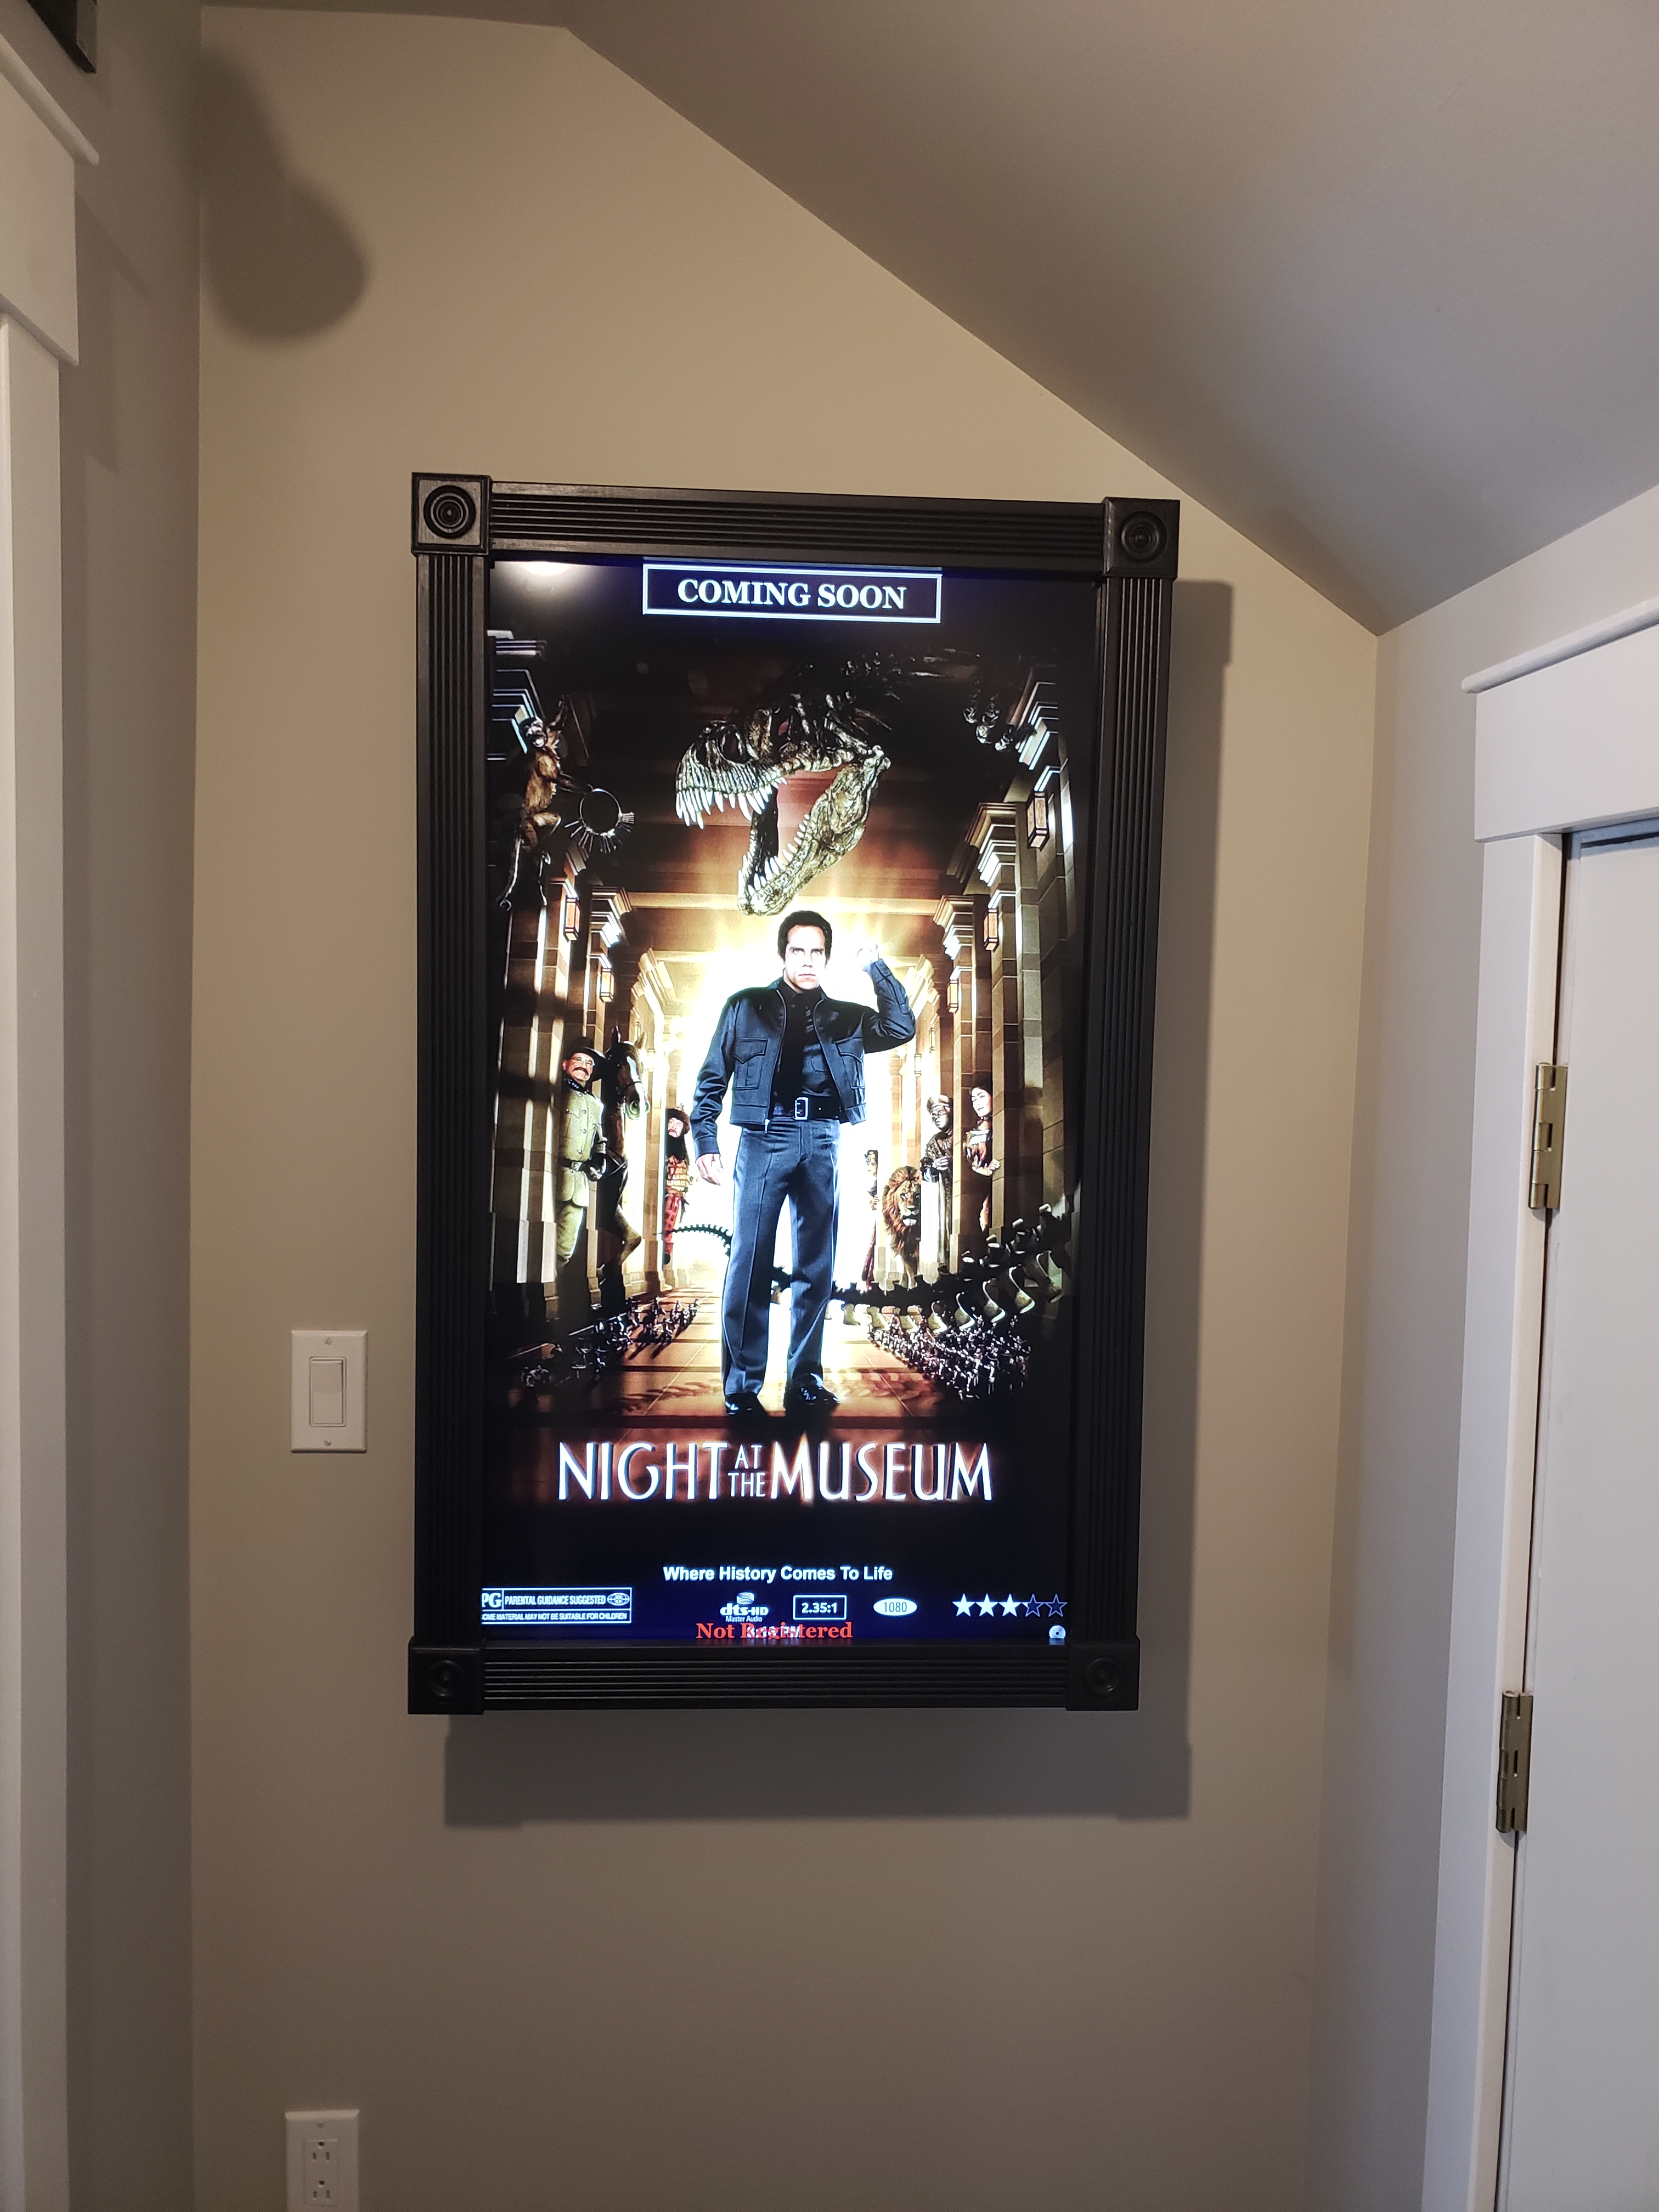 digital movie poster